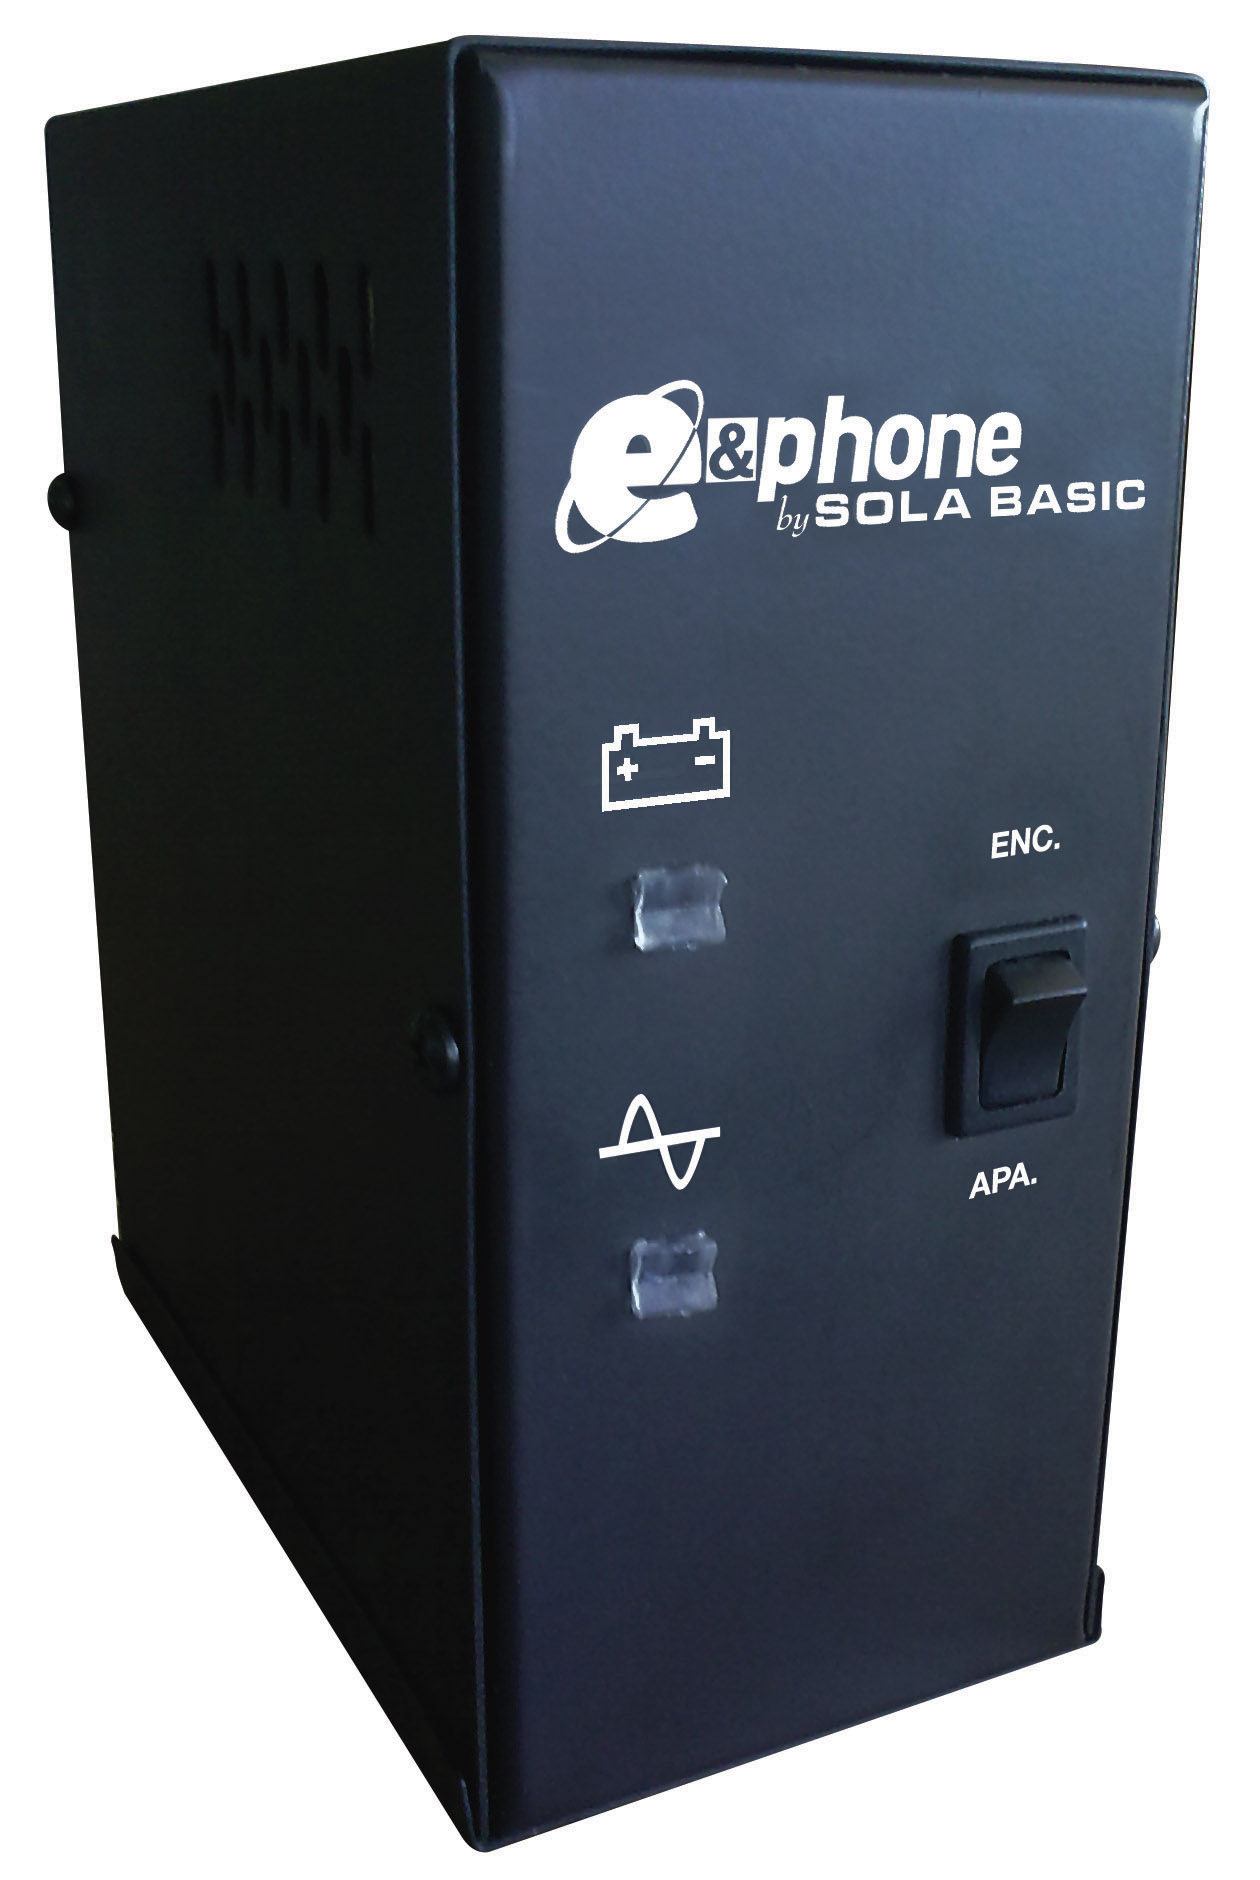 SOPORTE ELECTRONICO SOLA BASIC EPHONE 25W/50VA PARA MODEM Y TELEFONO TENSION LINEA 127 VOL VCA 60Hz UPC  - E&PHONE